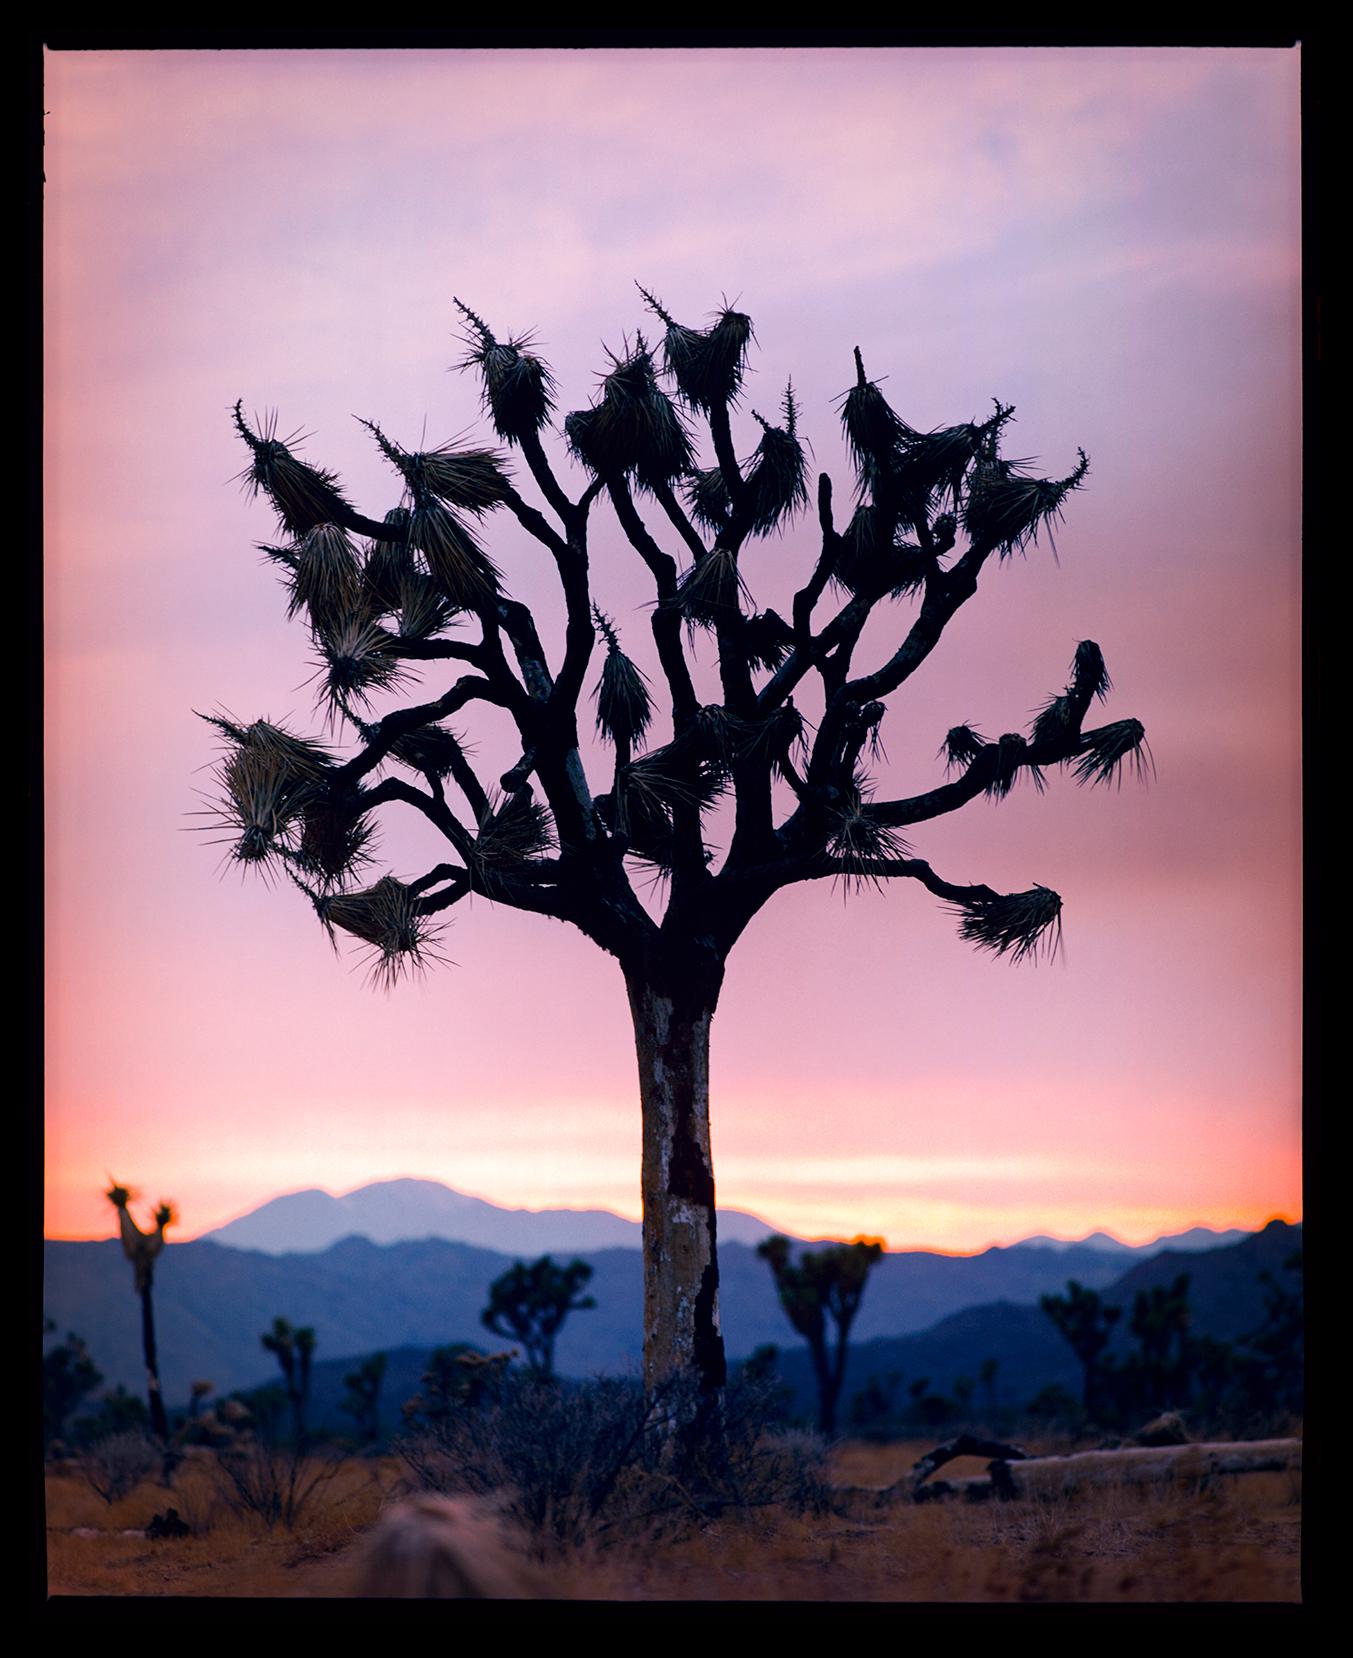 Richard Heeps Color Photograph - Joshua Tree, Mojave Desert, California - American landscape color photography